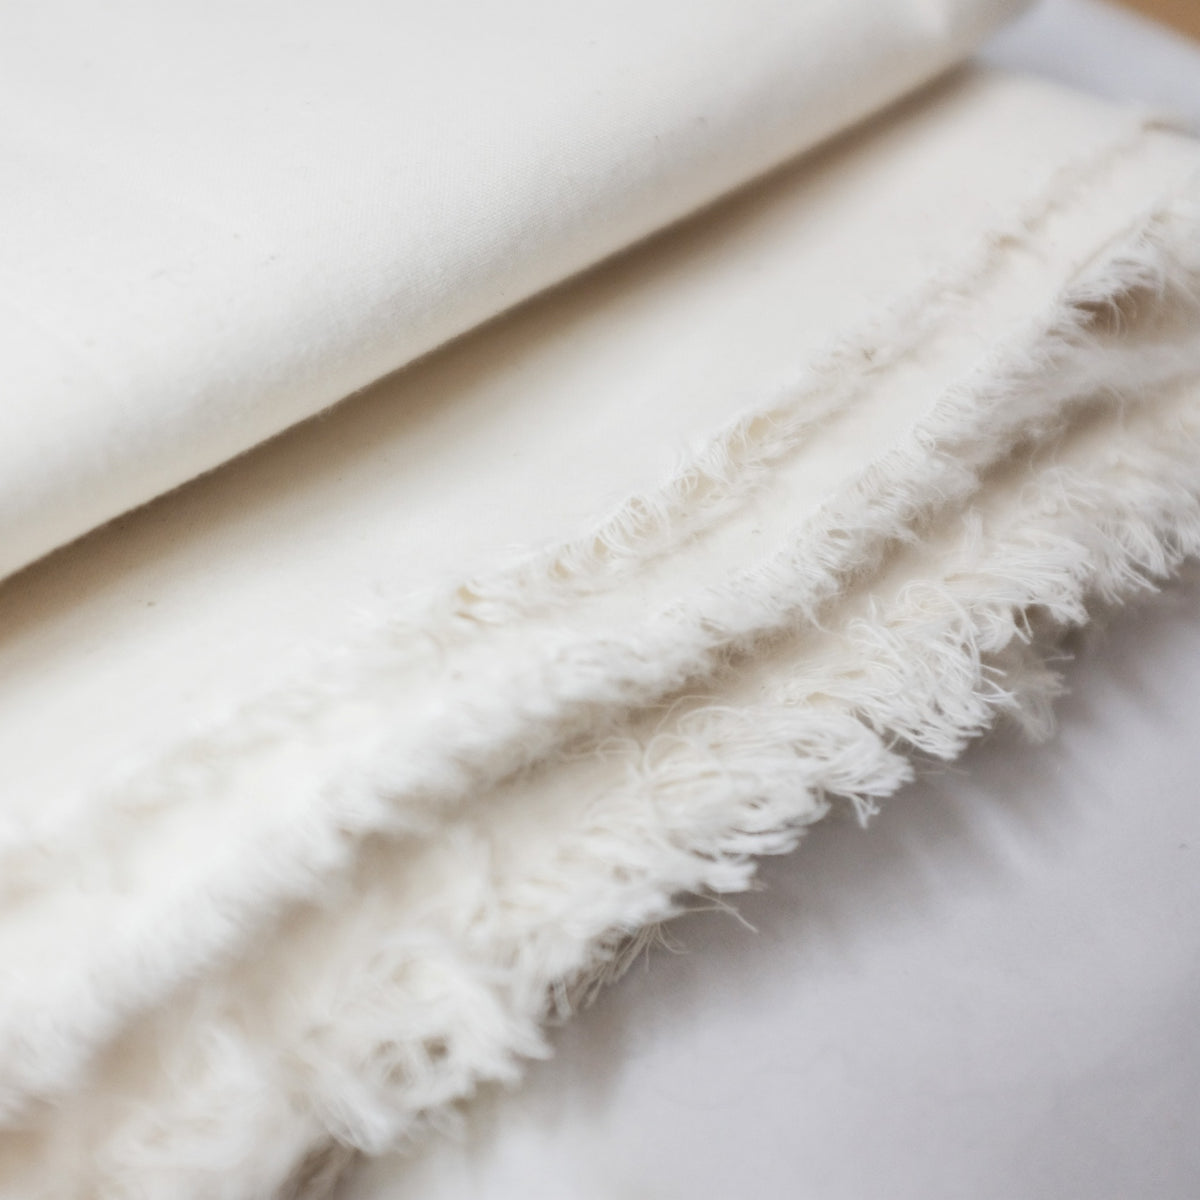 Mybecca 100% Cotton Muslin Fabric/Textile Unbleached, Draping Fabric Wide: 63 inch Natural 5-Yard (5 Feet x 15 Feet)(63 inch x 180 inch) Medium Weight